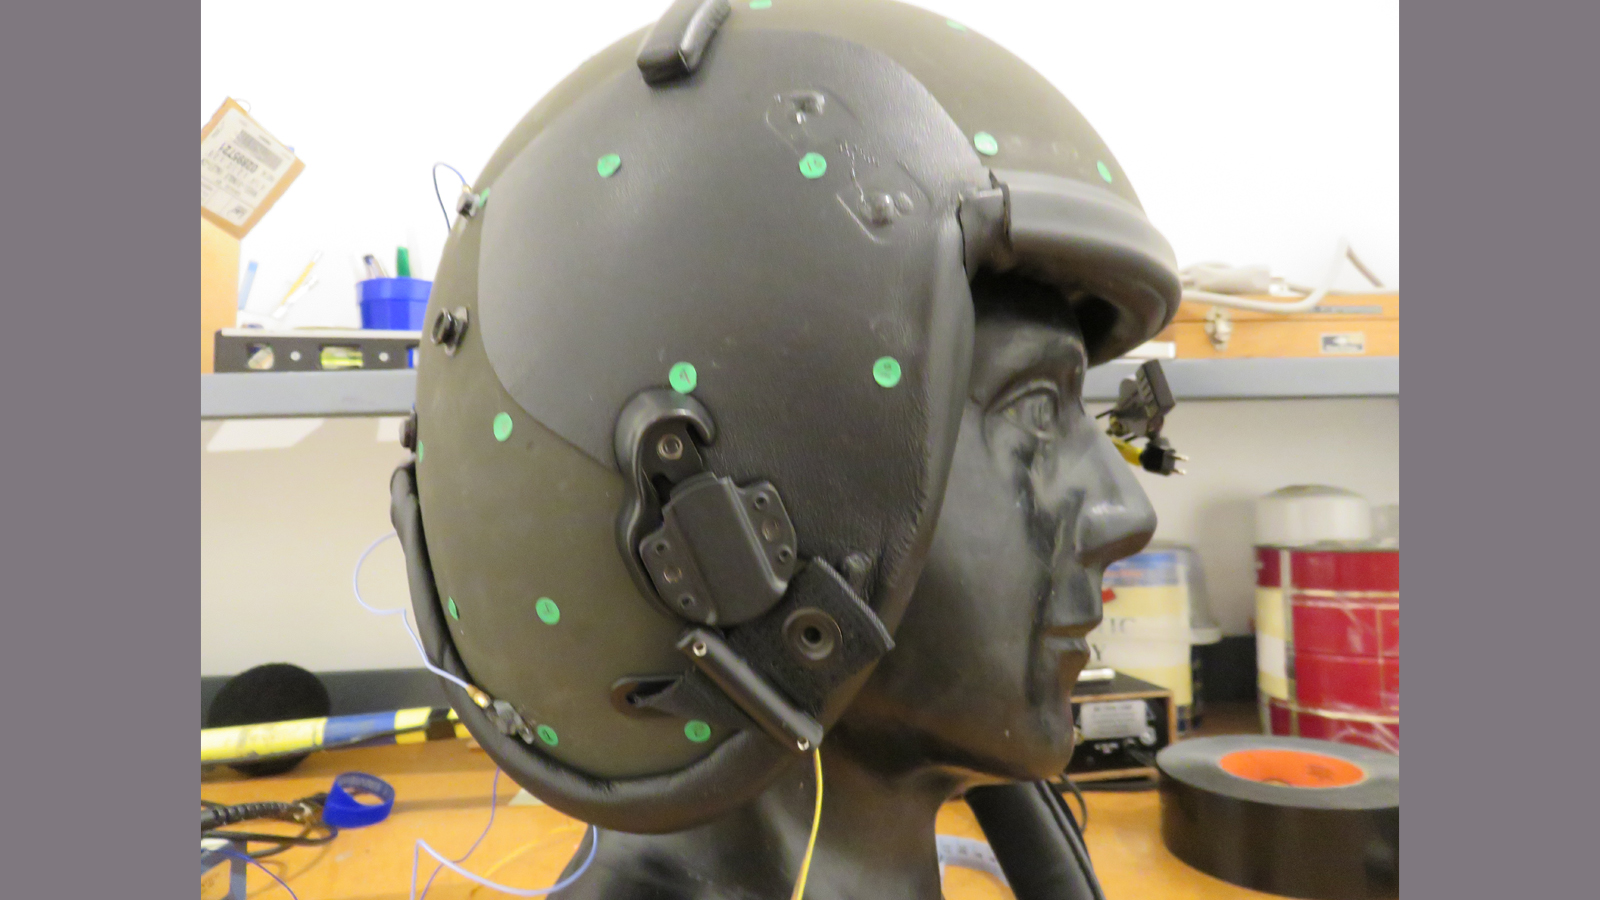 Us Navy Pilot Helmet, the helmet is on a testing dummy